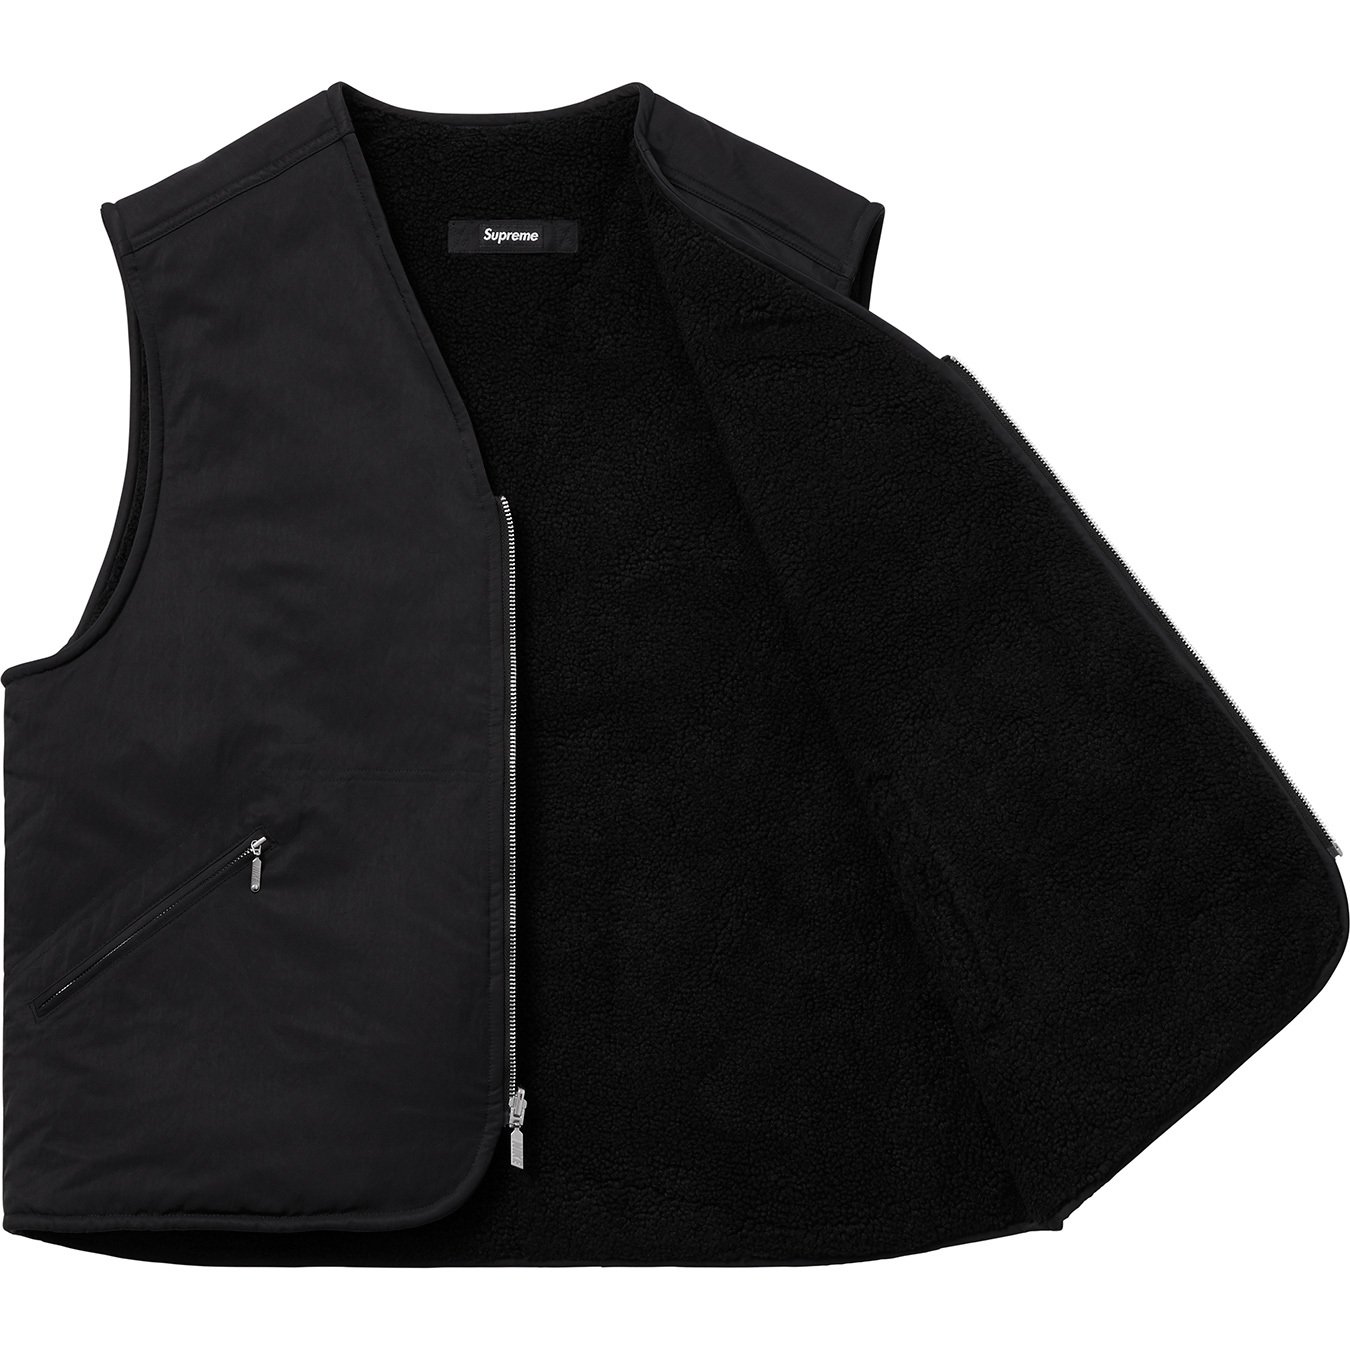 Supreme®/Nike® Reversible Nylon Sherpa Vest - Supreme Community